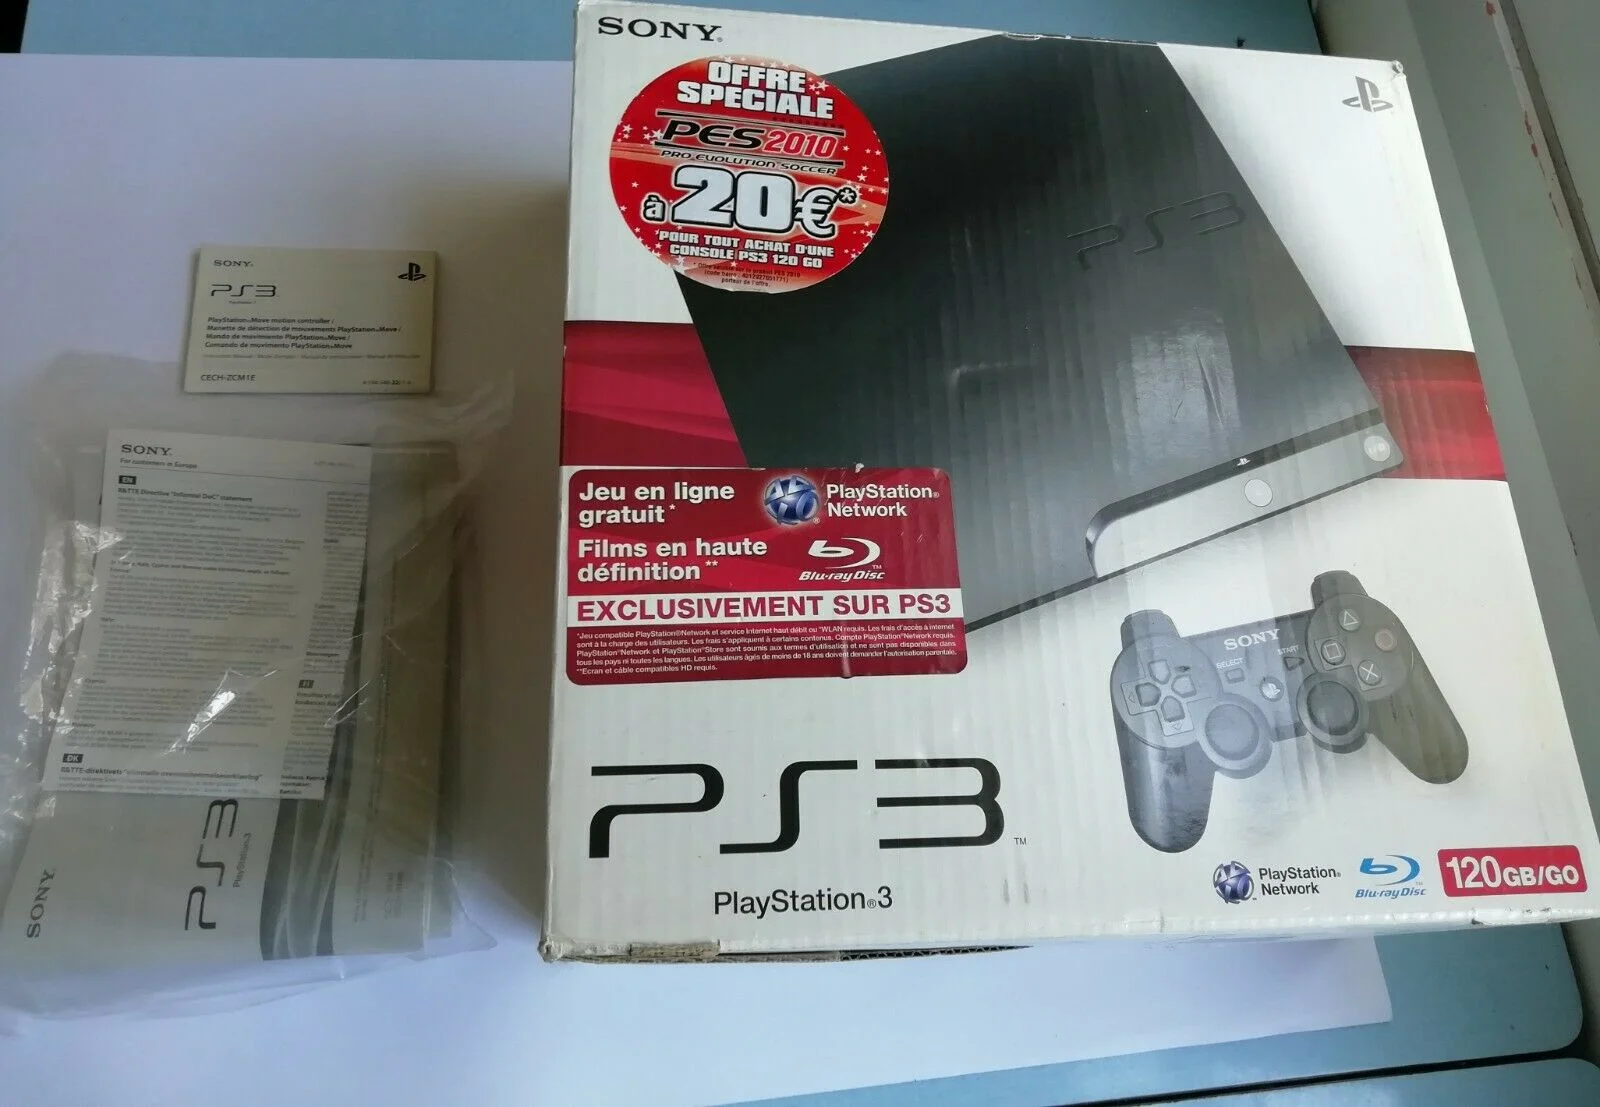  Sony Playstation 3 Slim 120Go Special 20€ PES 2010 Bundle